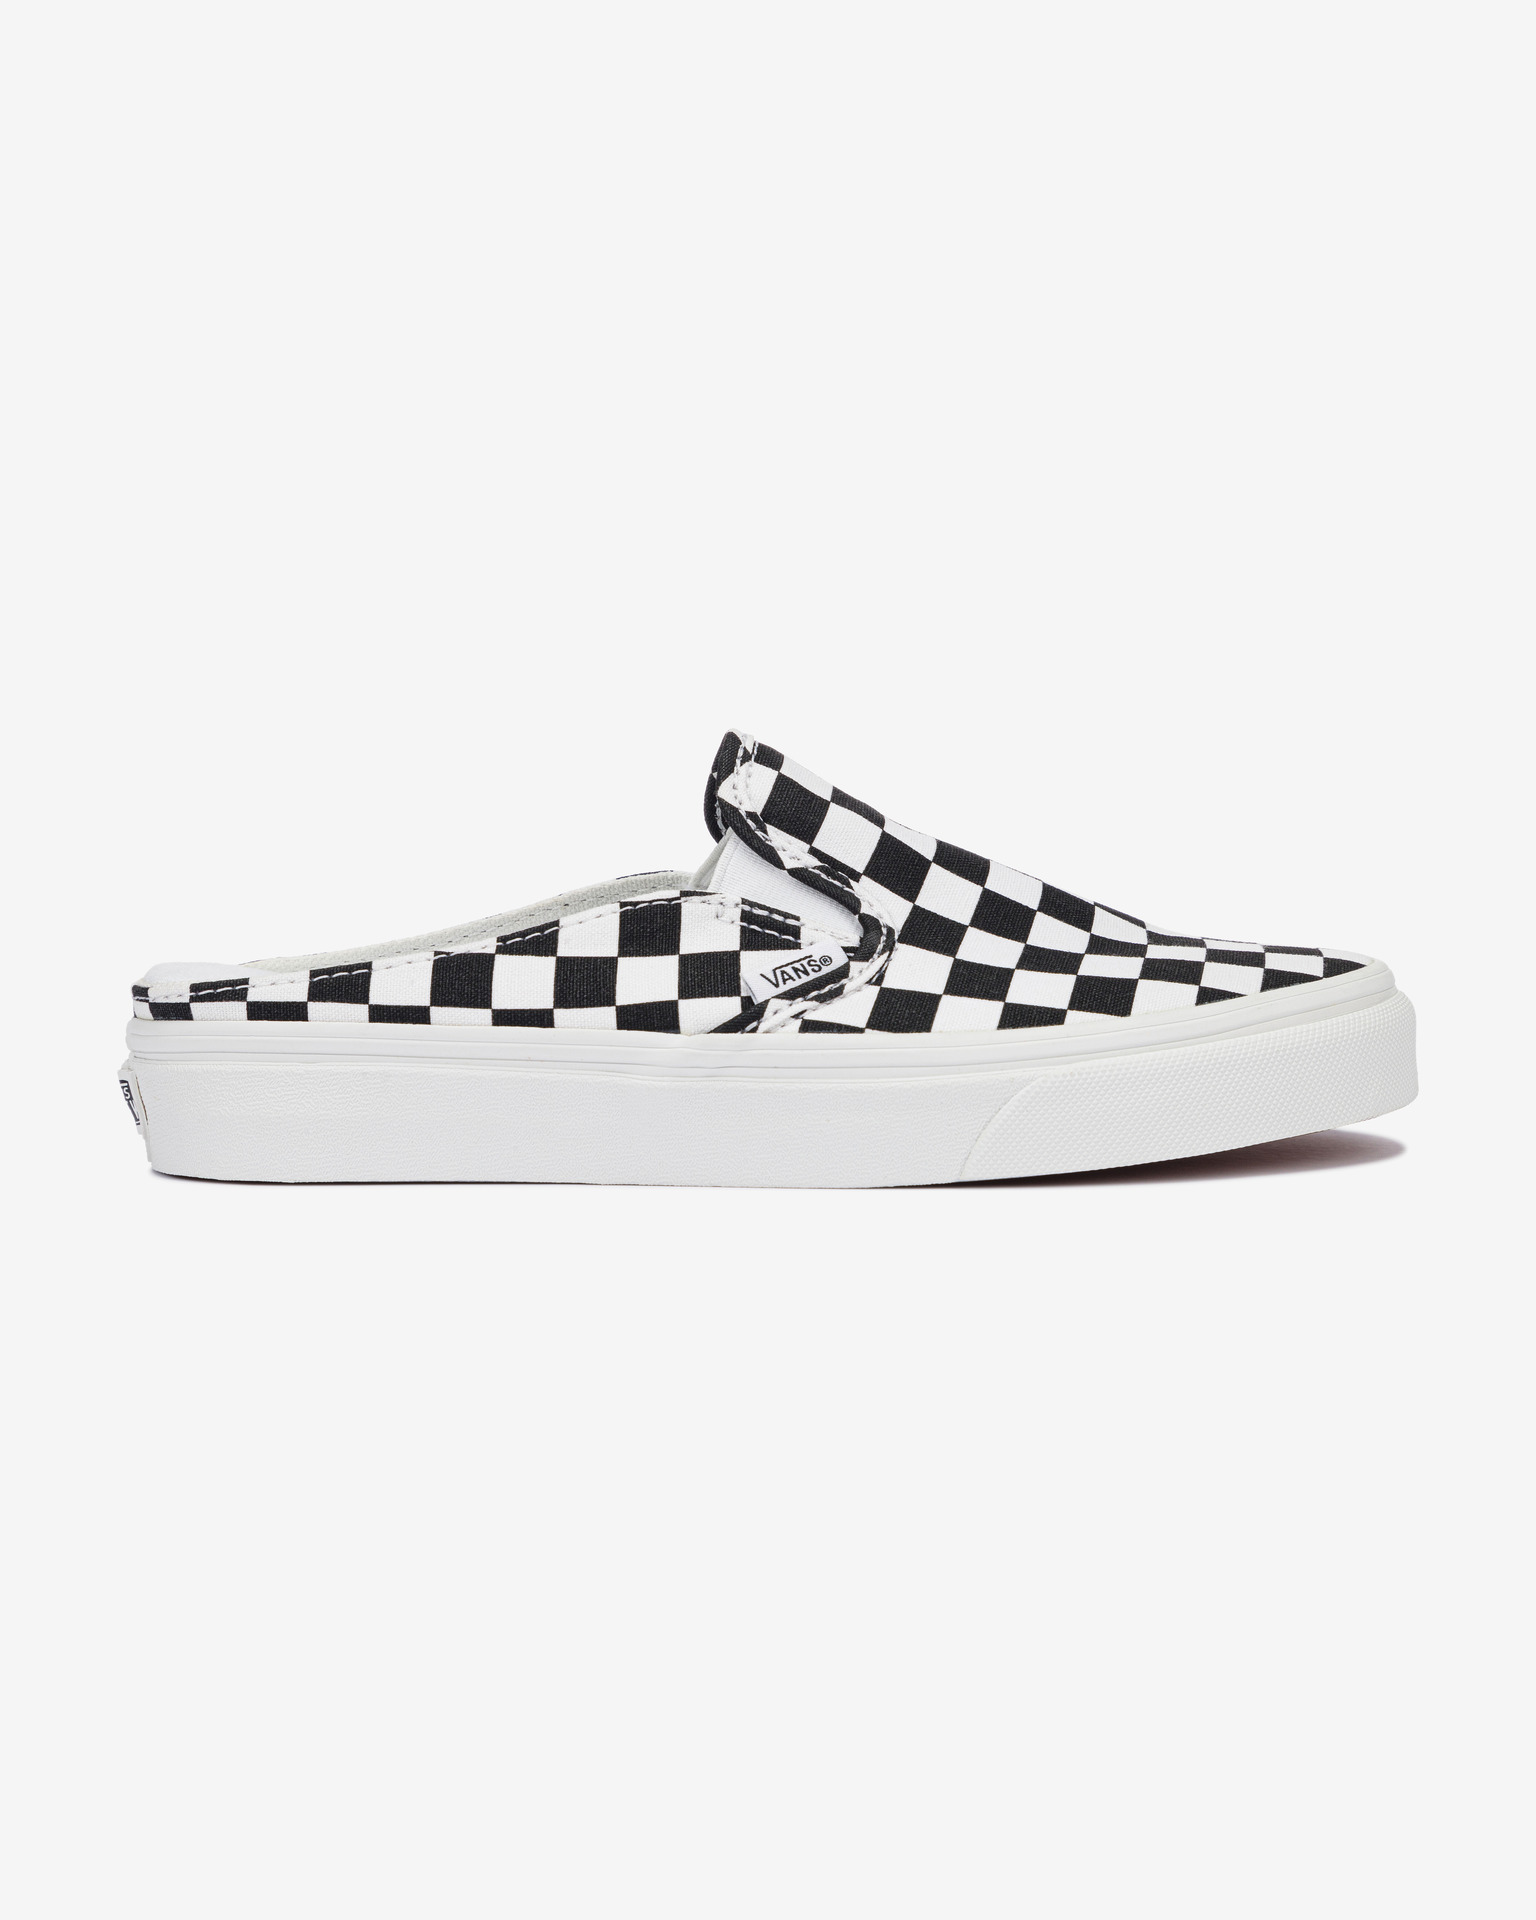 Vans - Slip-On rubber checkerboard slippers in white